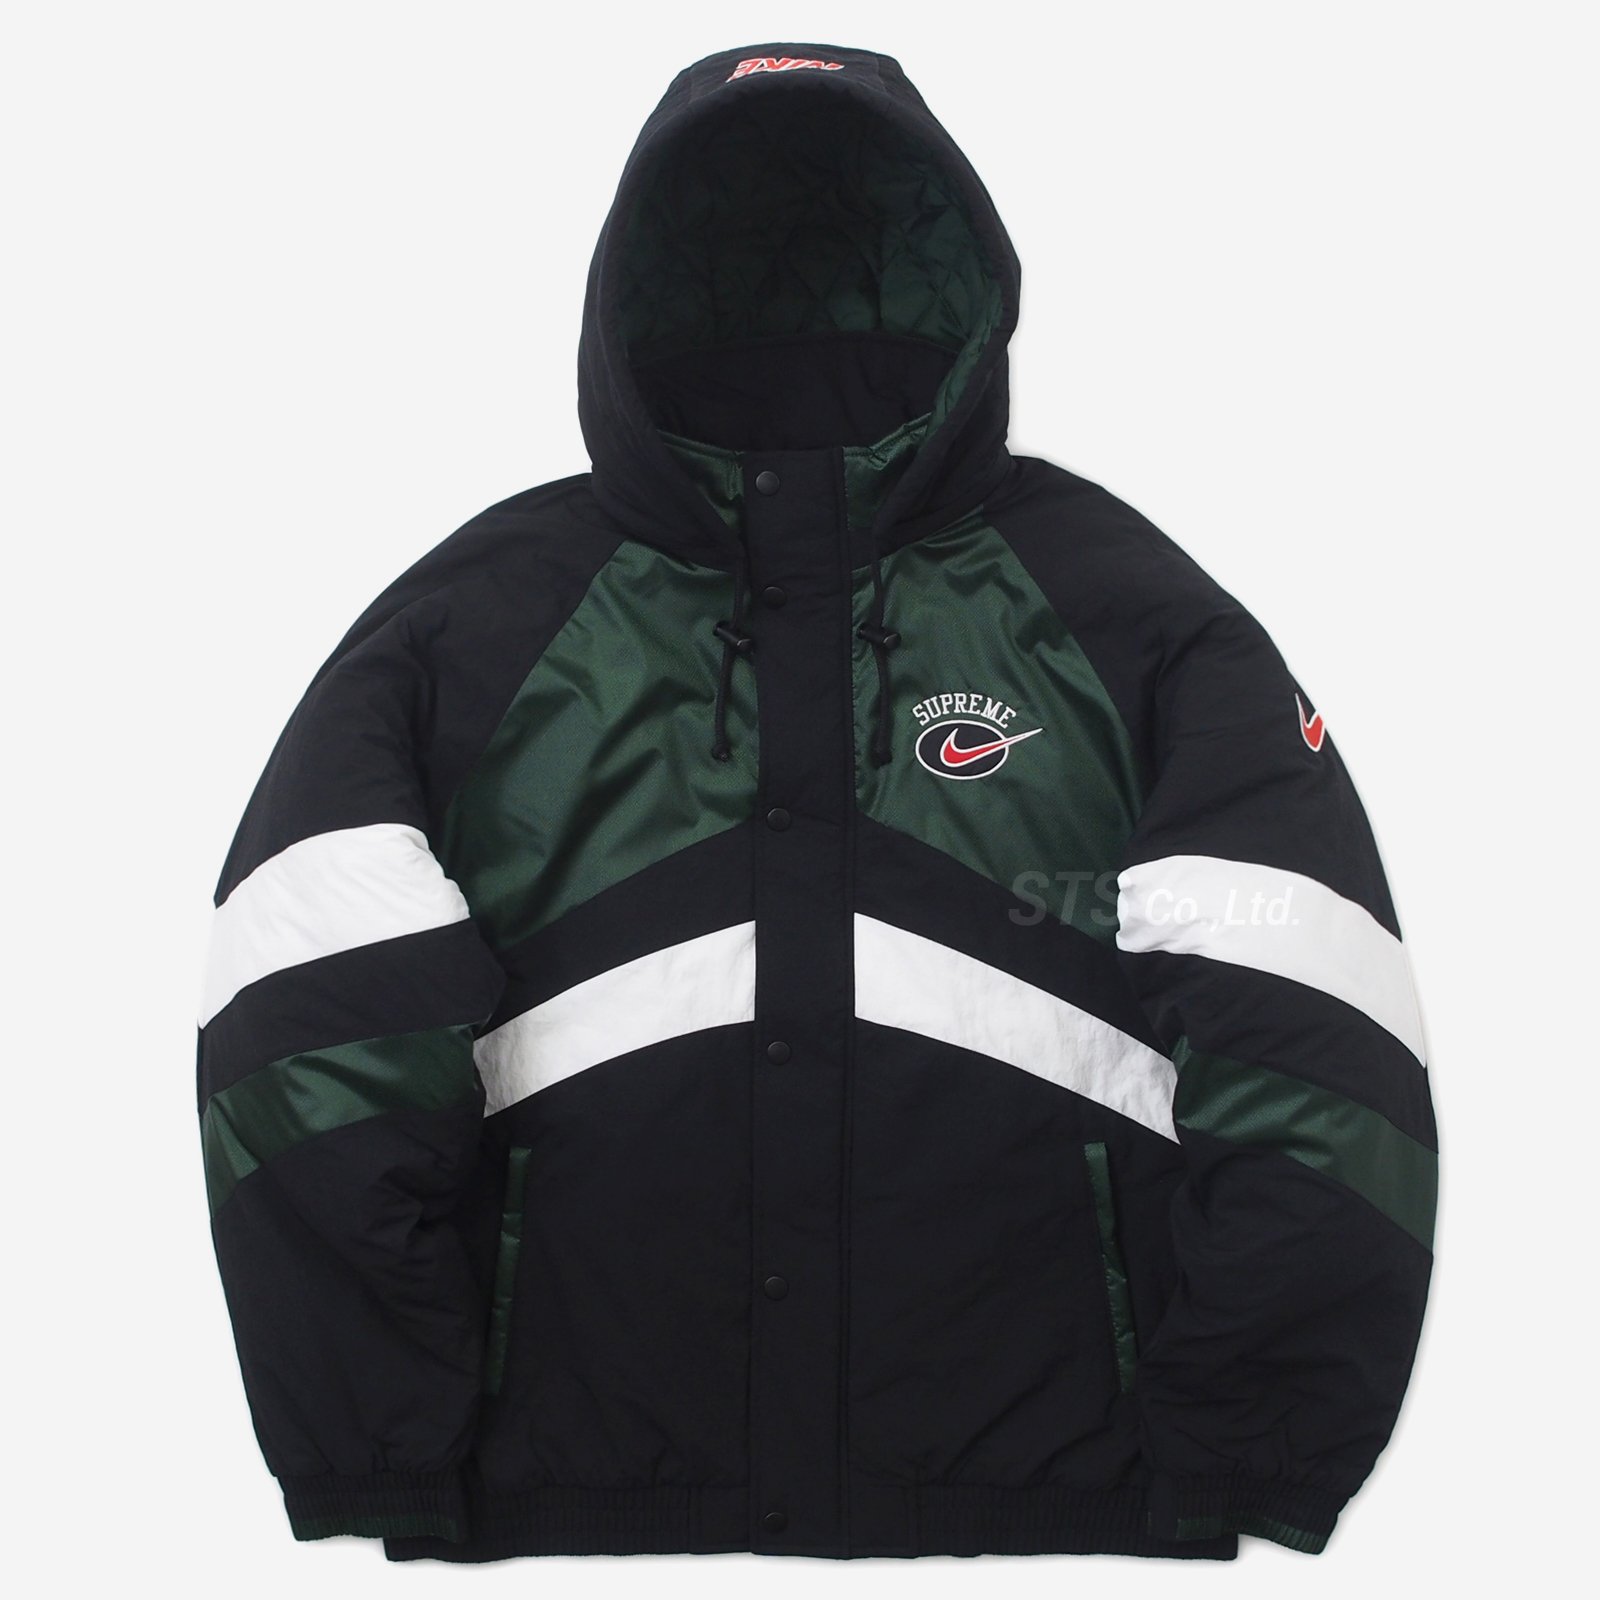 Supreme/Nike Hooded Sport Jacket - UG.SHAFT